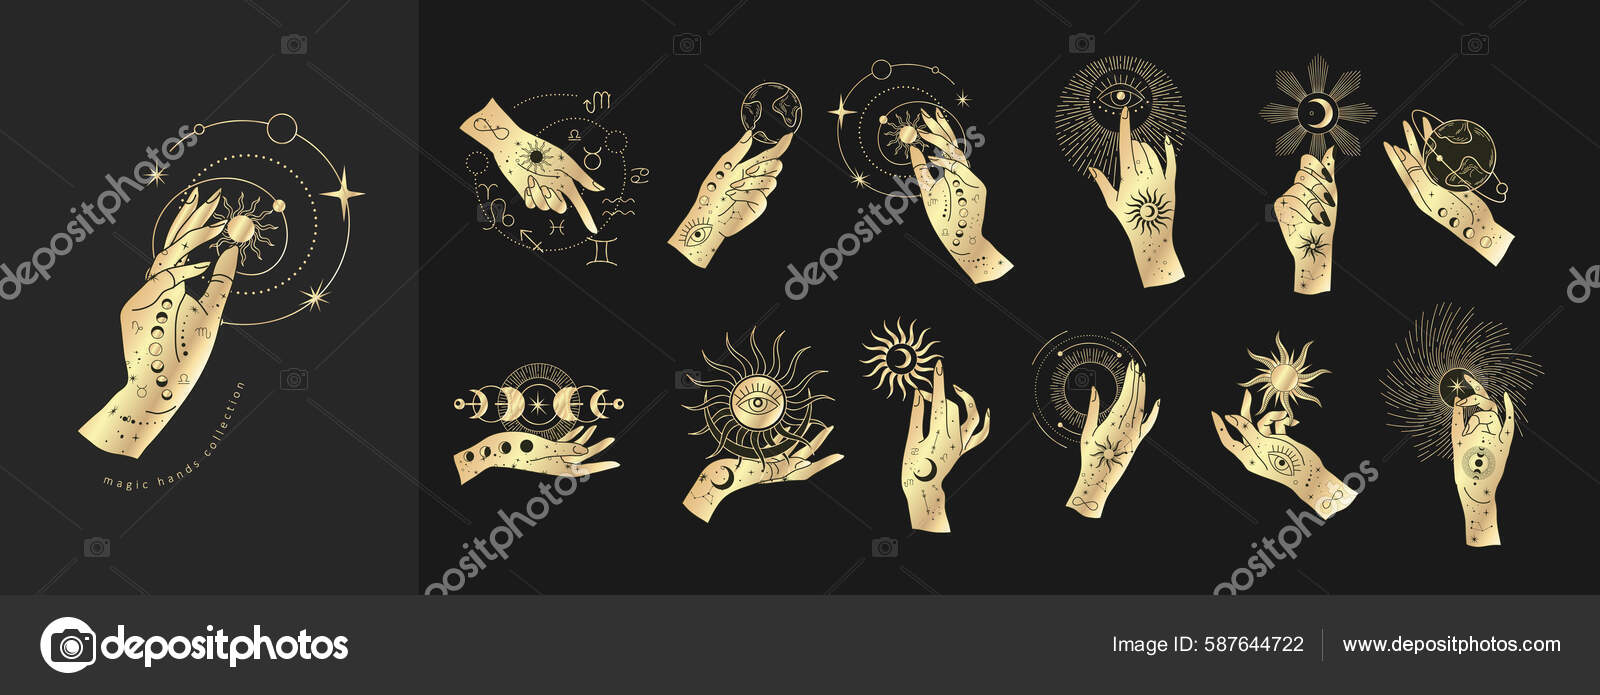 https://st.depositphotos.com/2894069/58764/v/1600/depositphotos_587644722-stock-illustration-golden-spiritual-magic-logo-talisman.jpg